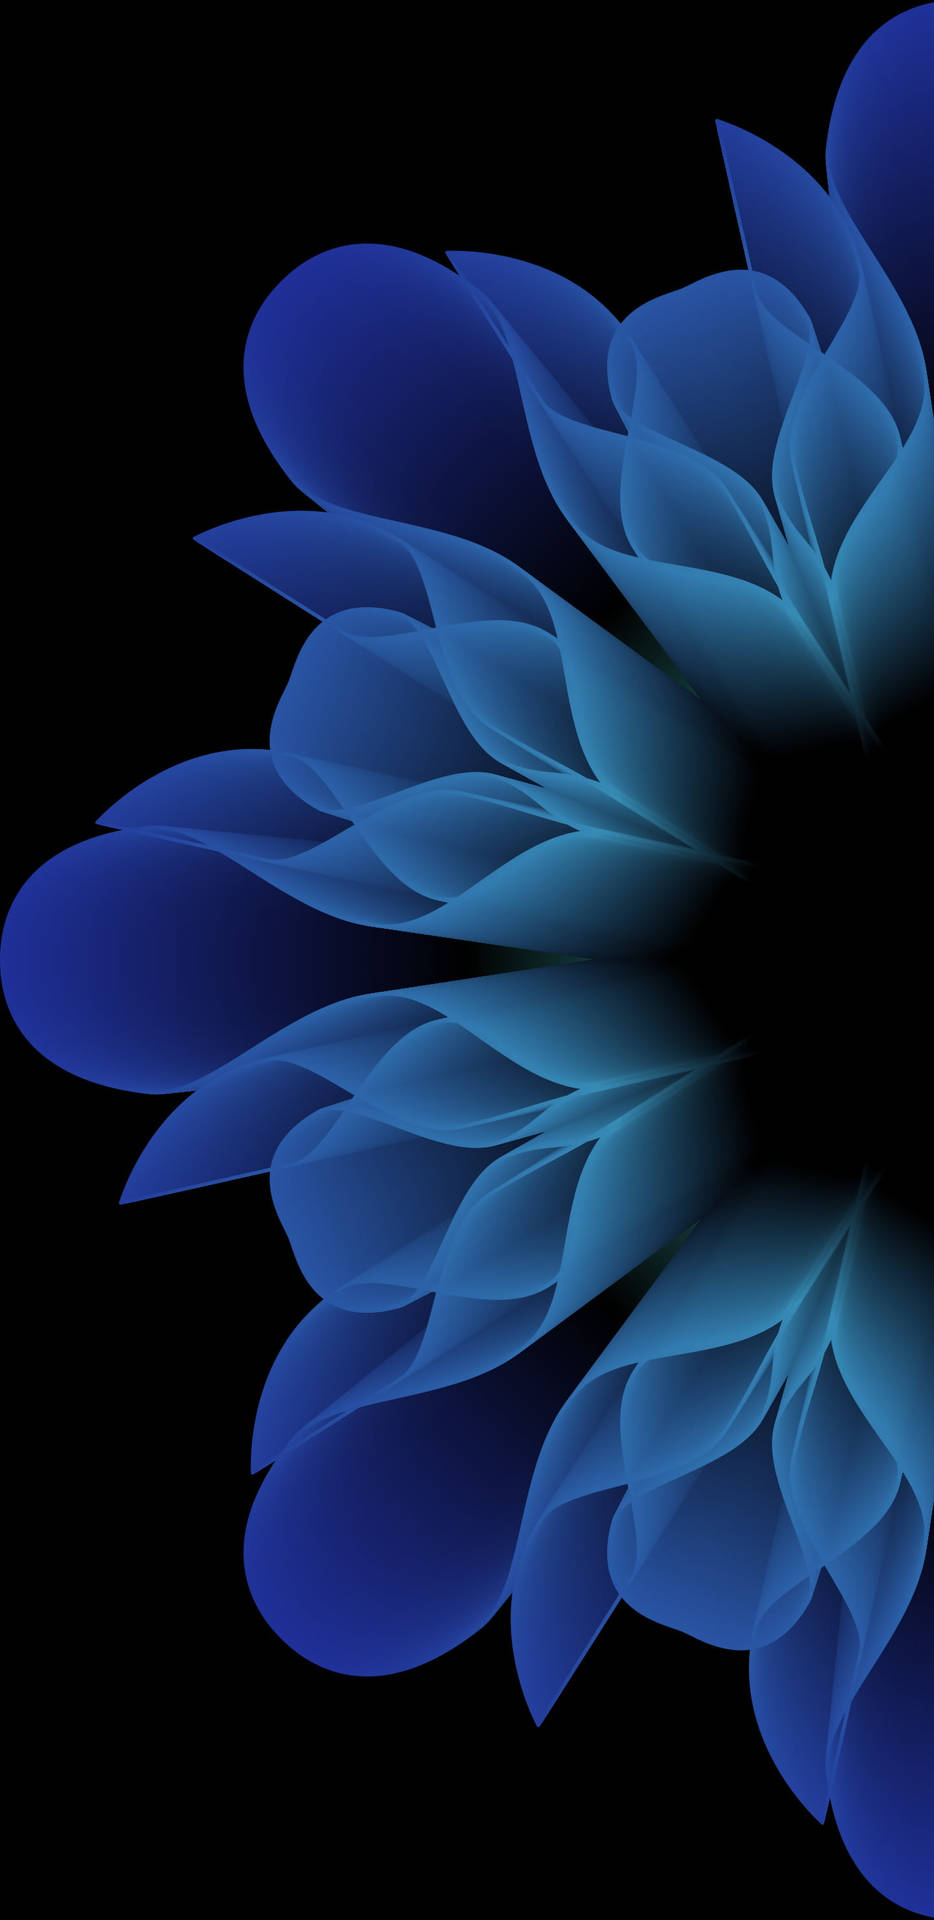 Blue Flowers Ios 12 Wallpaper